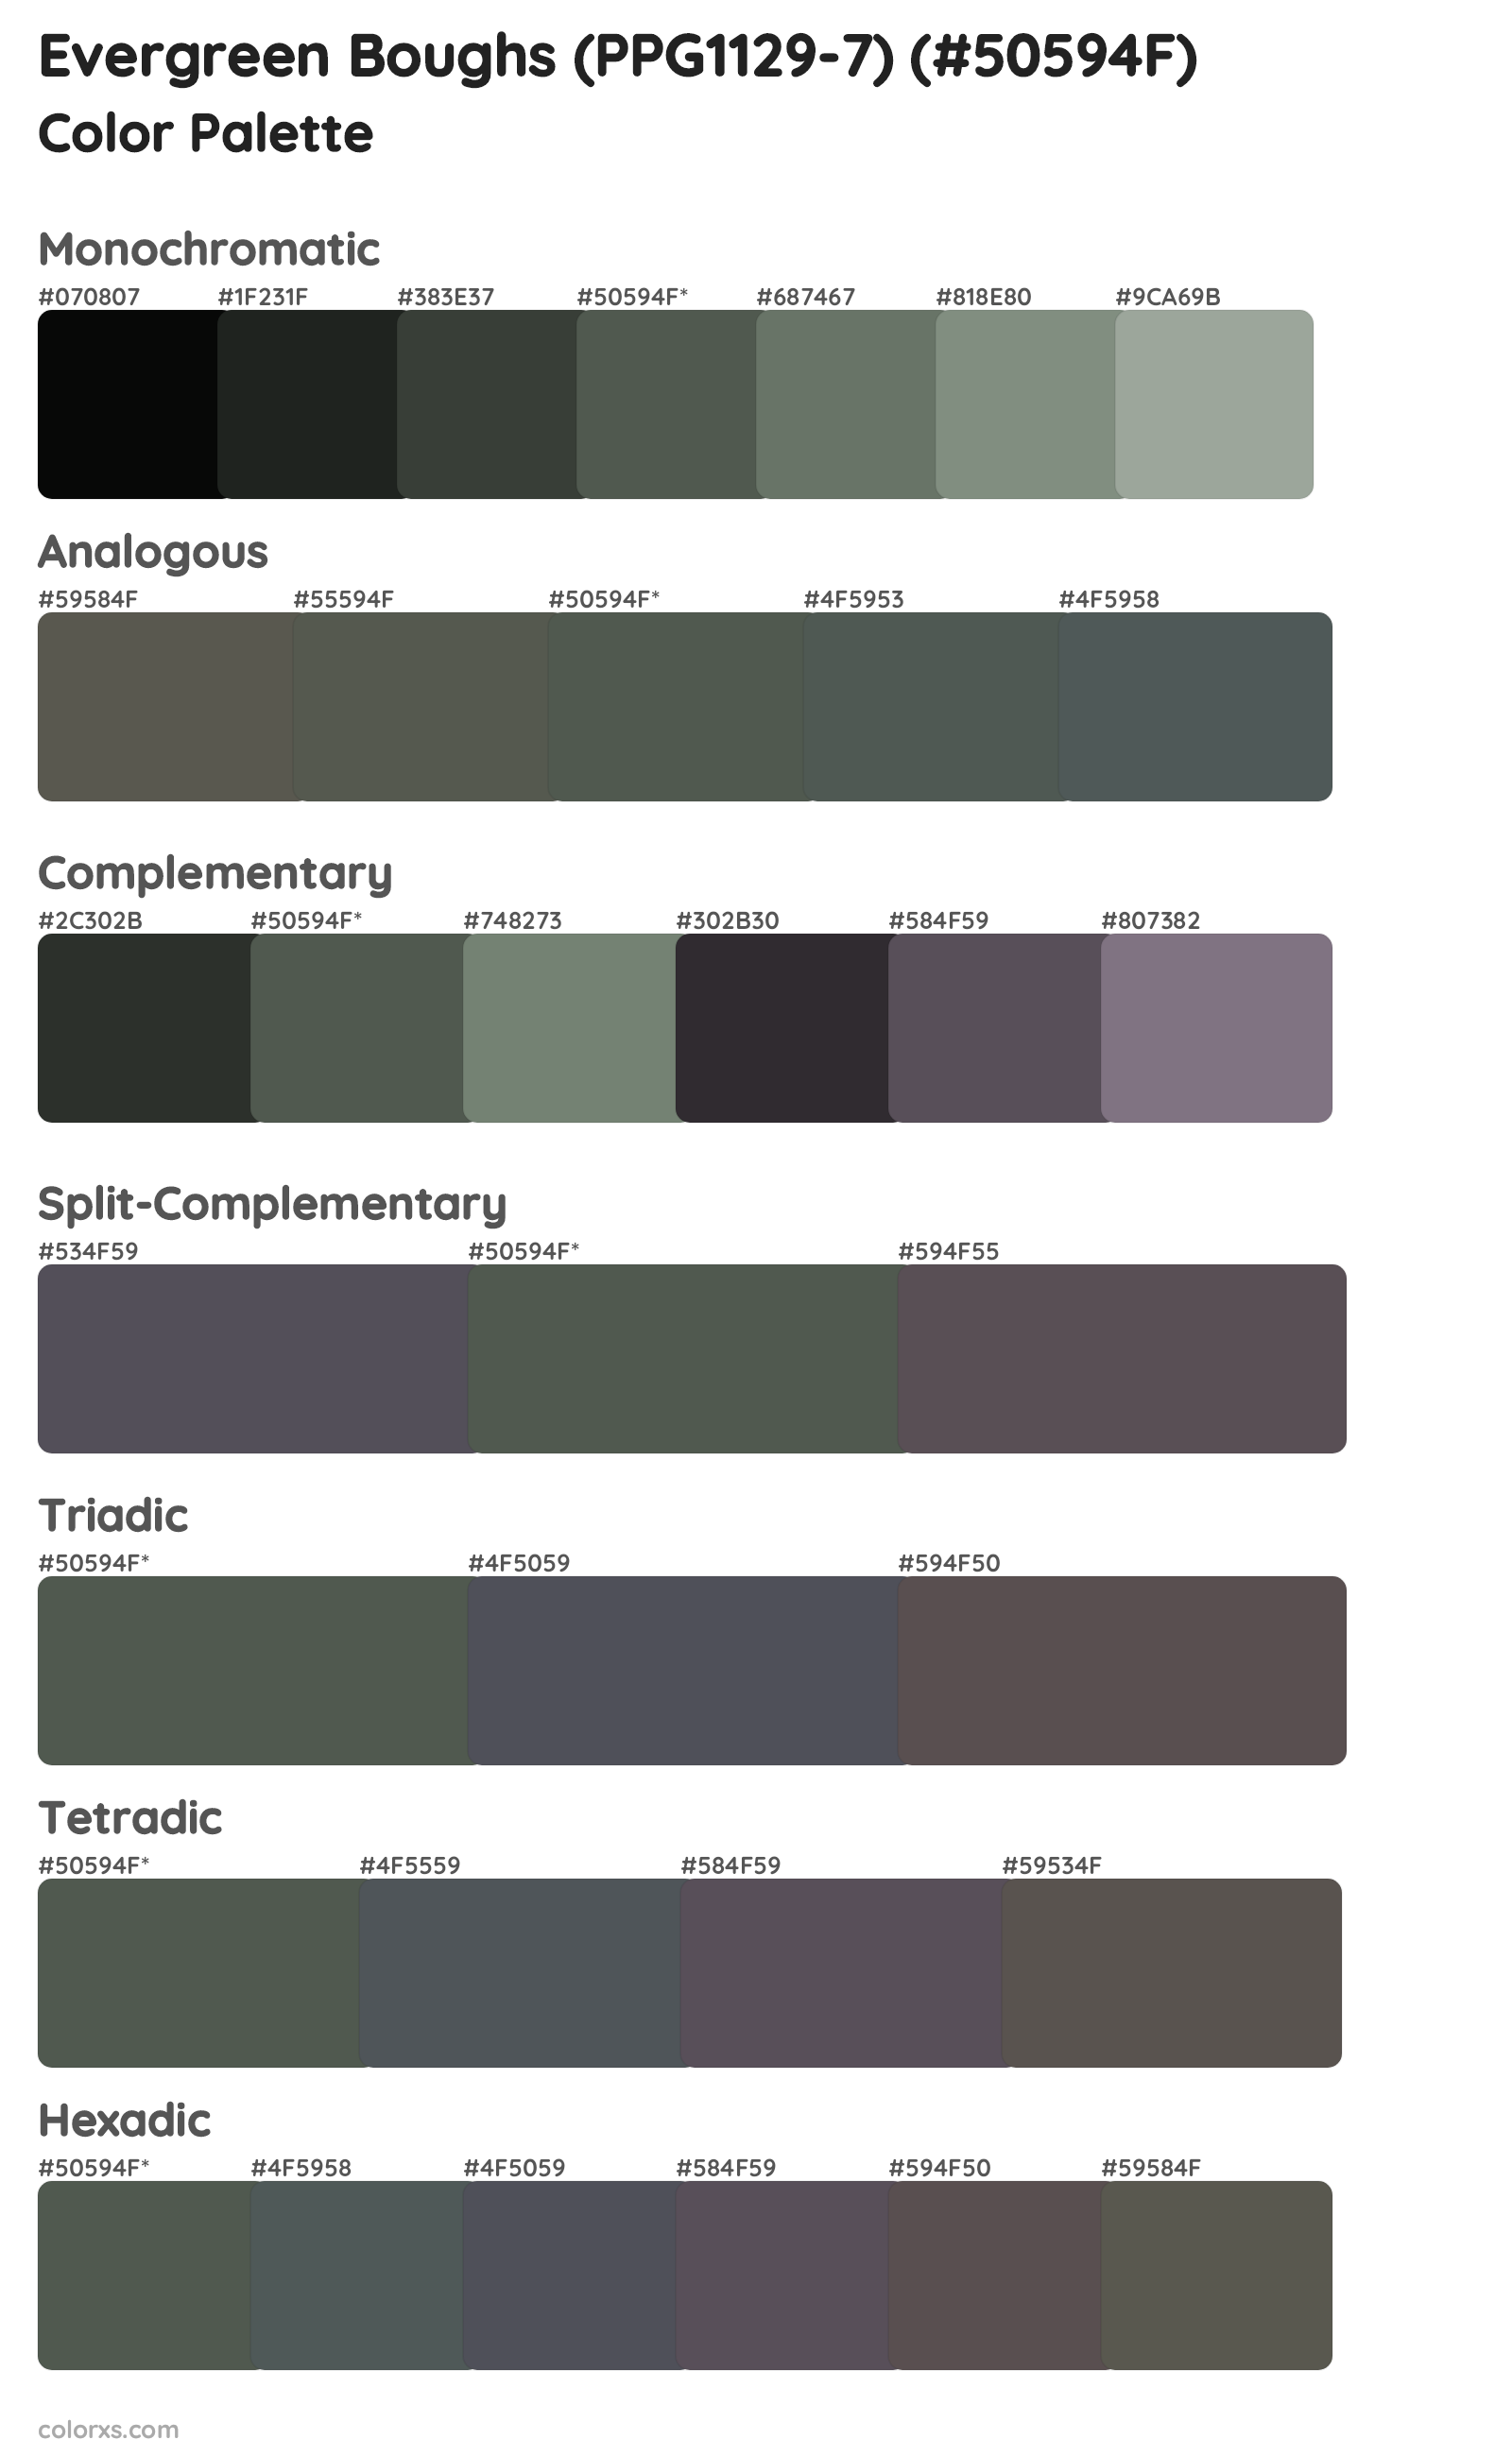 Evergreen Boughs (PPG1129-7) Color Scheme Palettes